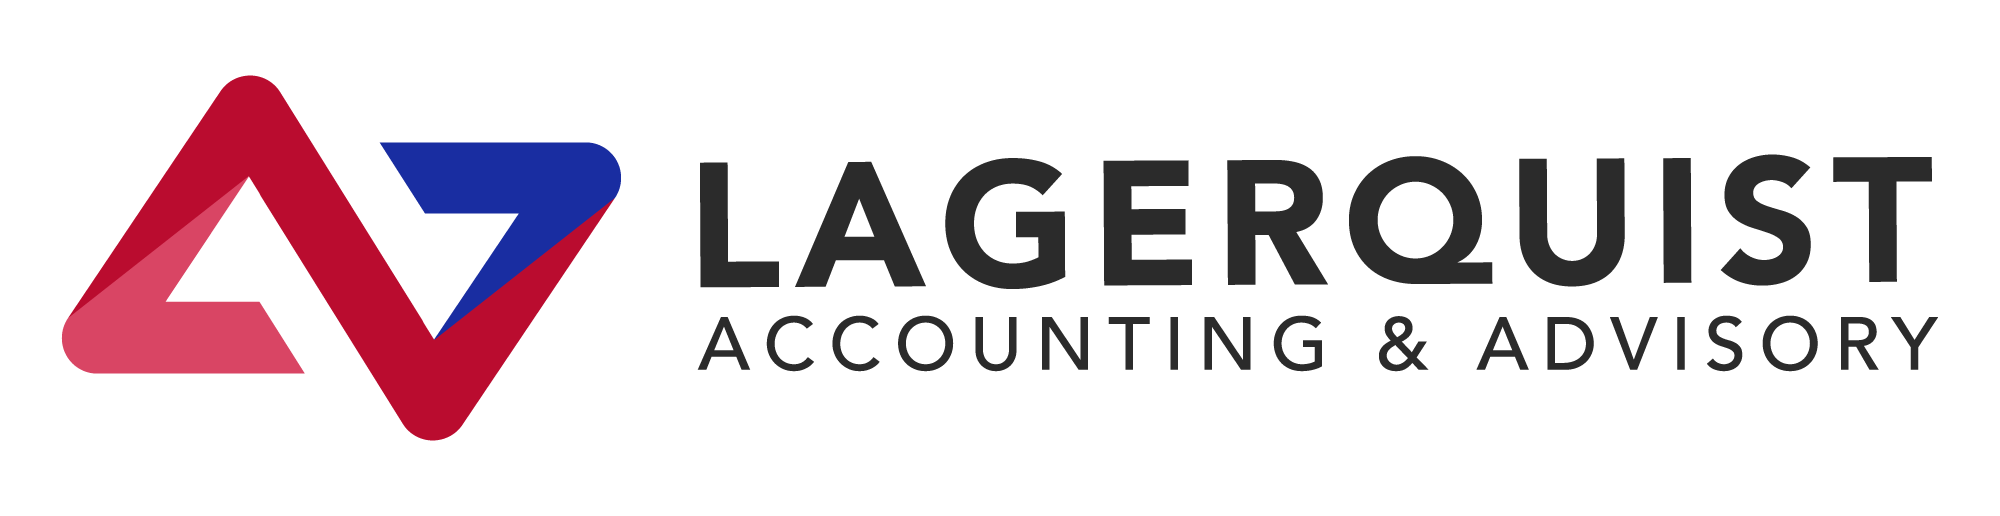 Lagerquist Accounting & Advisory Logo